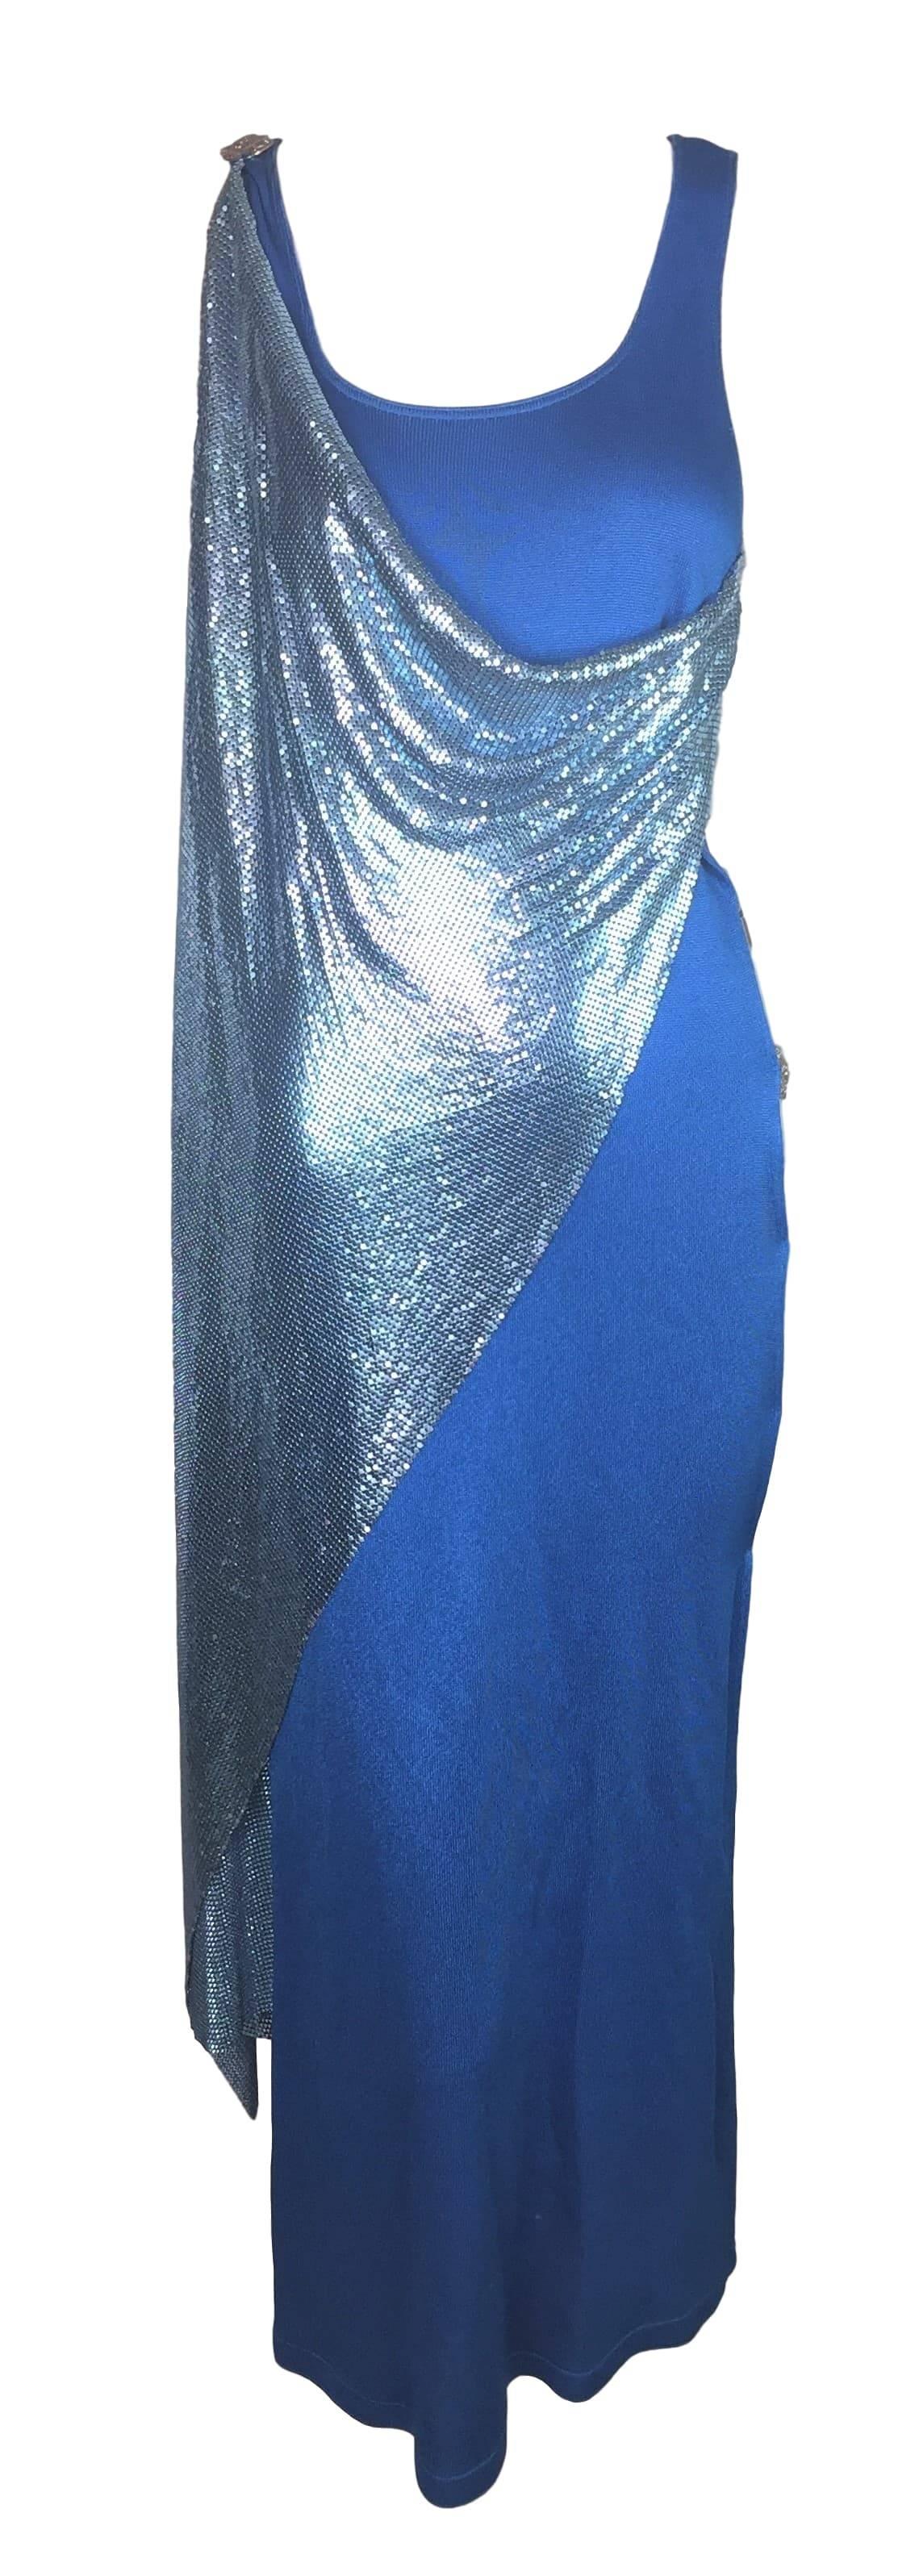 blue chainmail dress